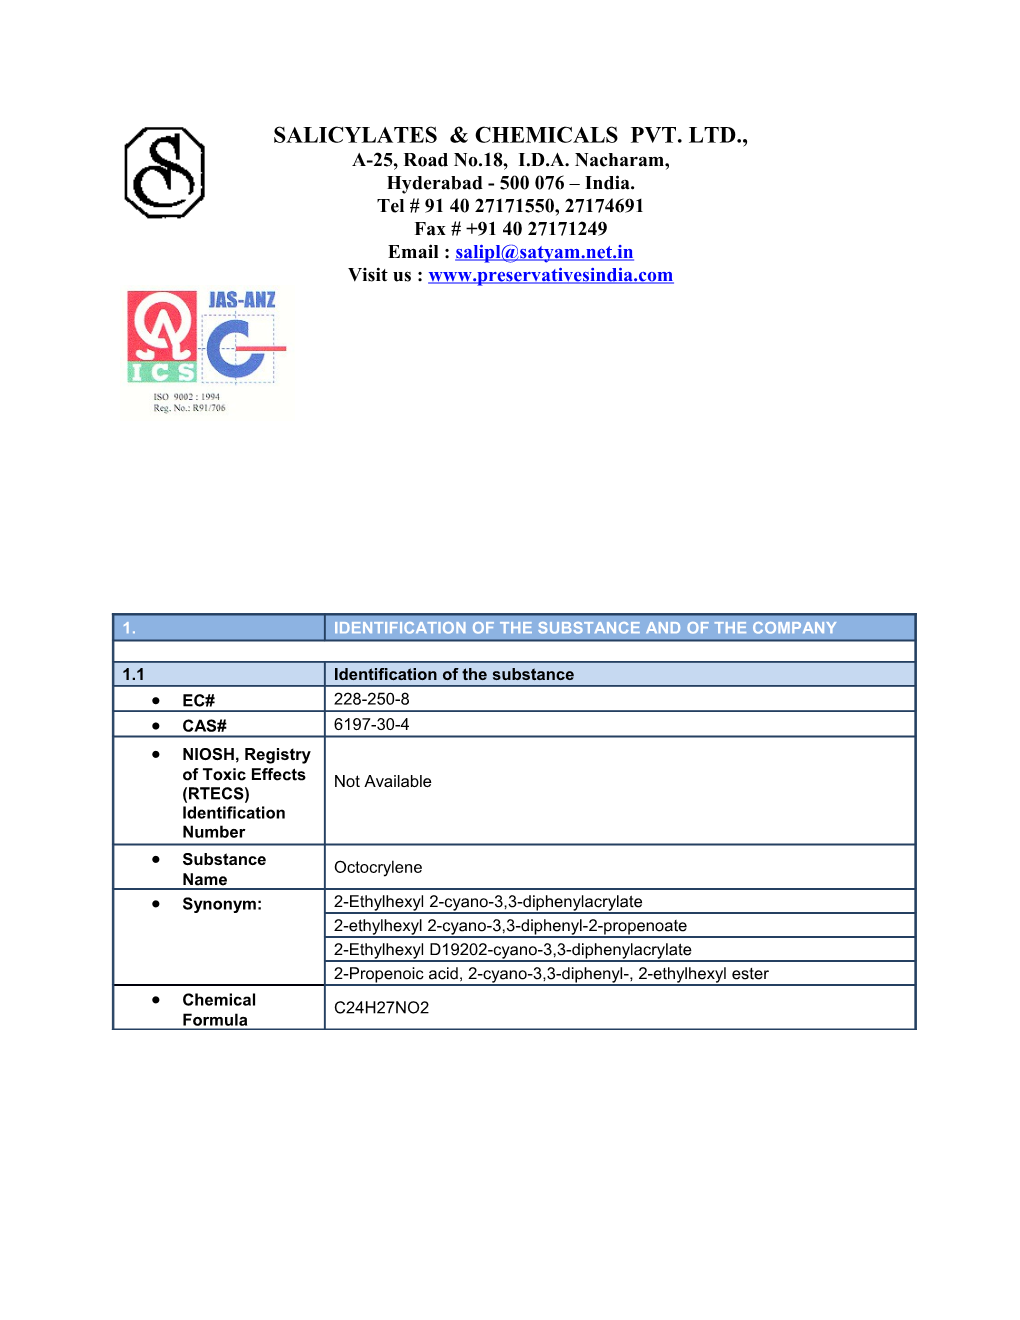 NIOSH, Registry of Toxic Effects (RTECS) Identification Number